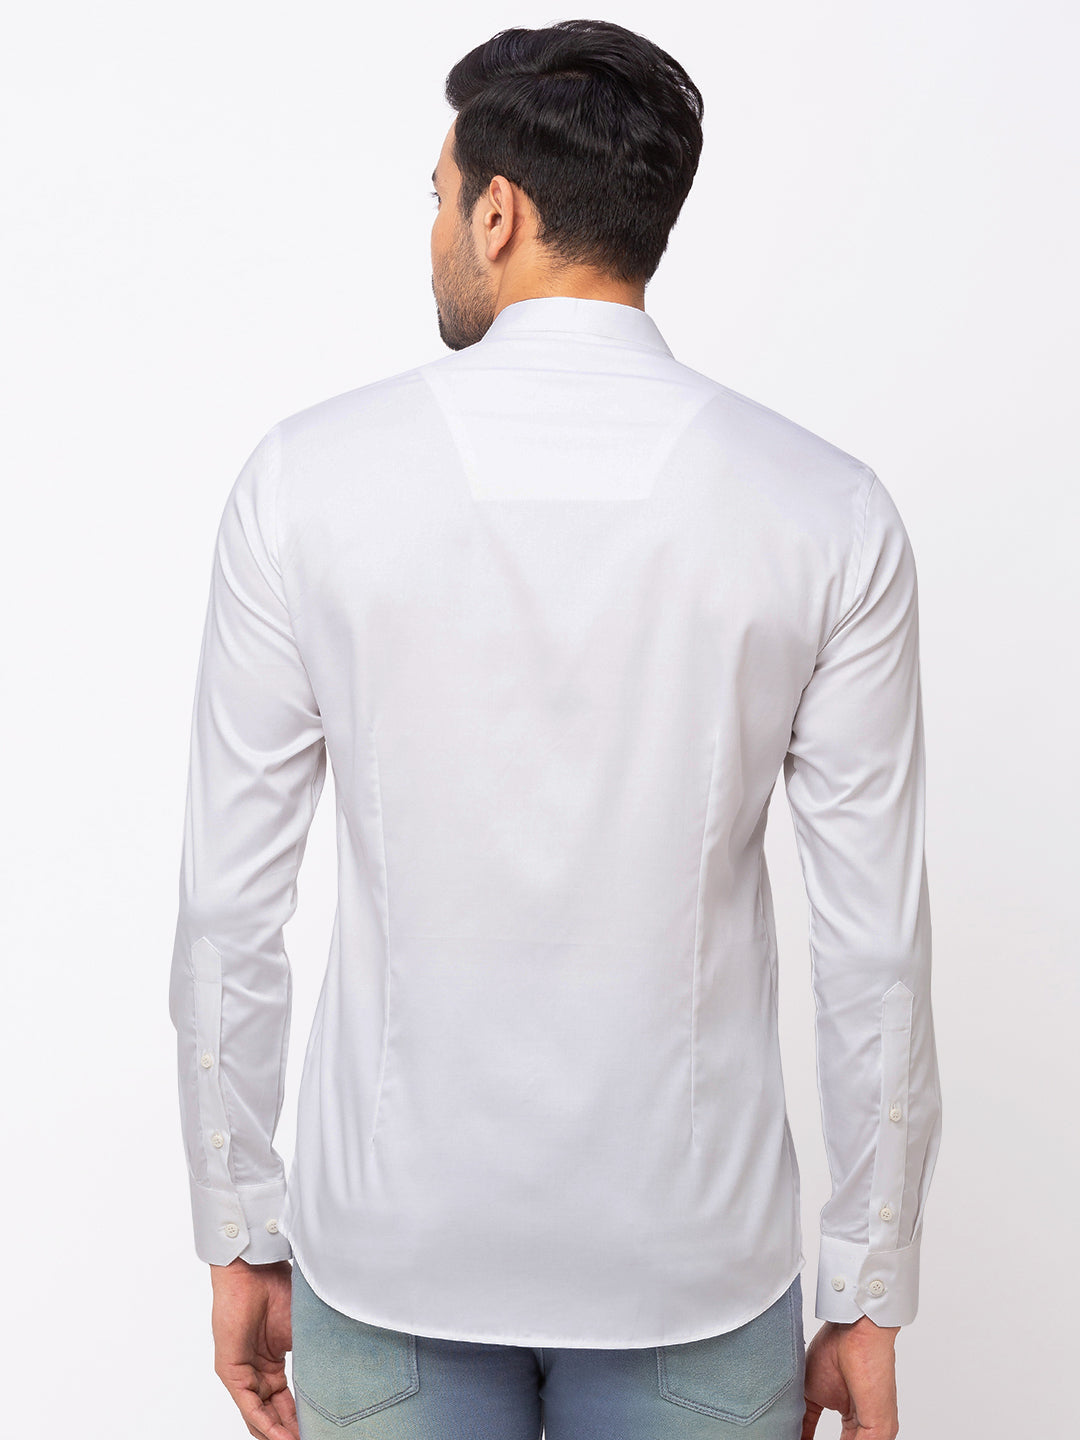 White Formal Shirt with Mandarin Collar